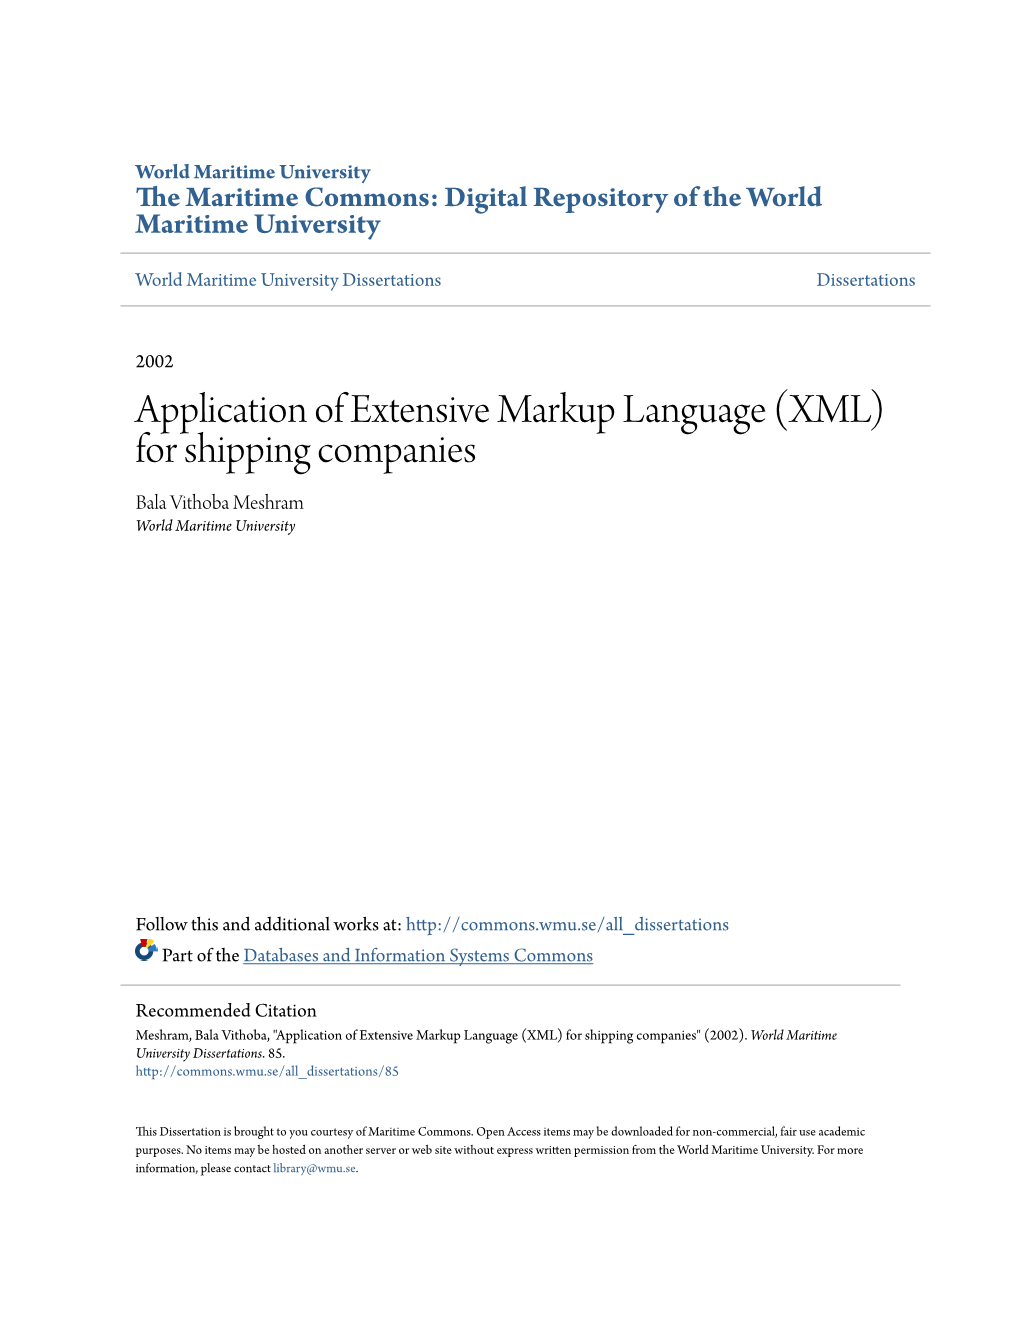 Application of Extensive Markup Language (XML) for Shipping Companies Bala Vithoba Meshram World Maritime University